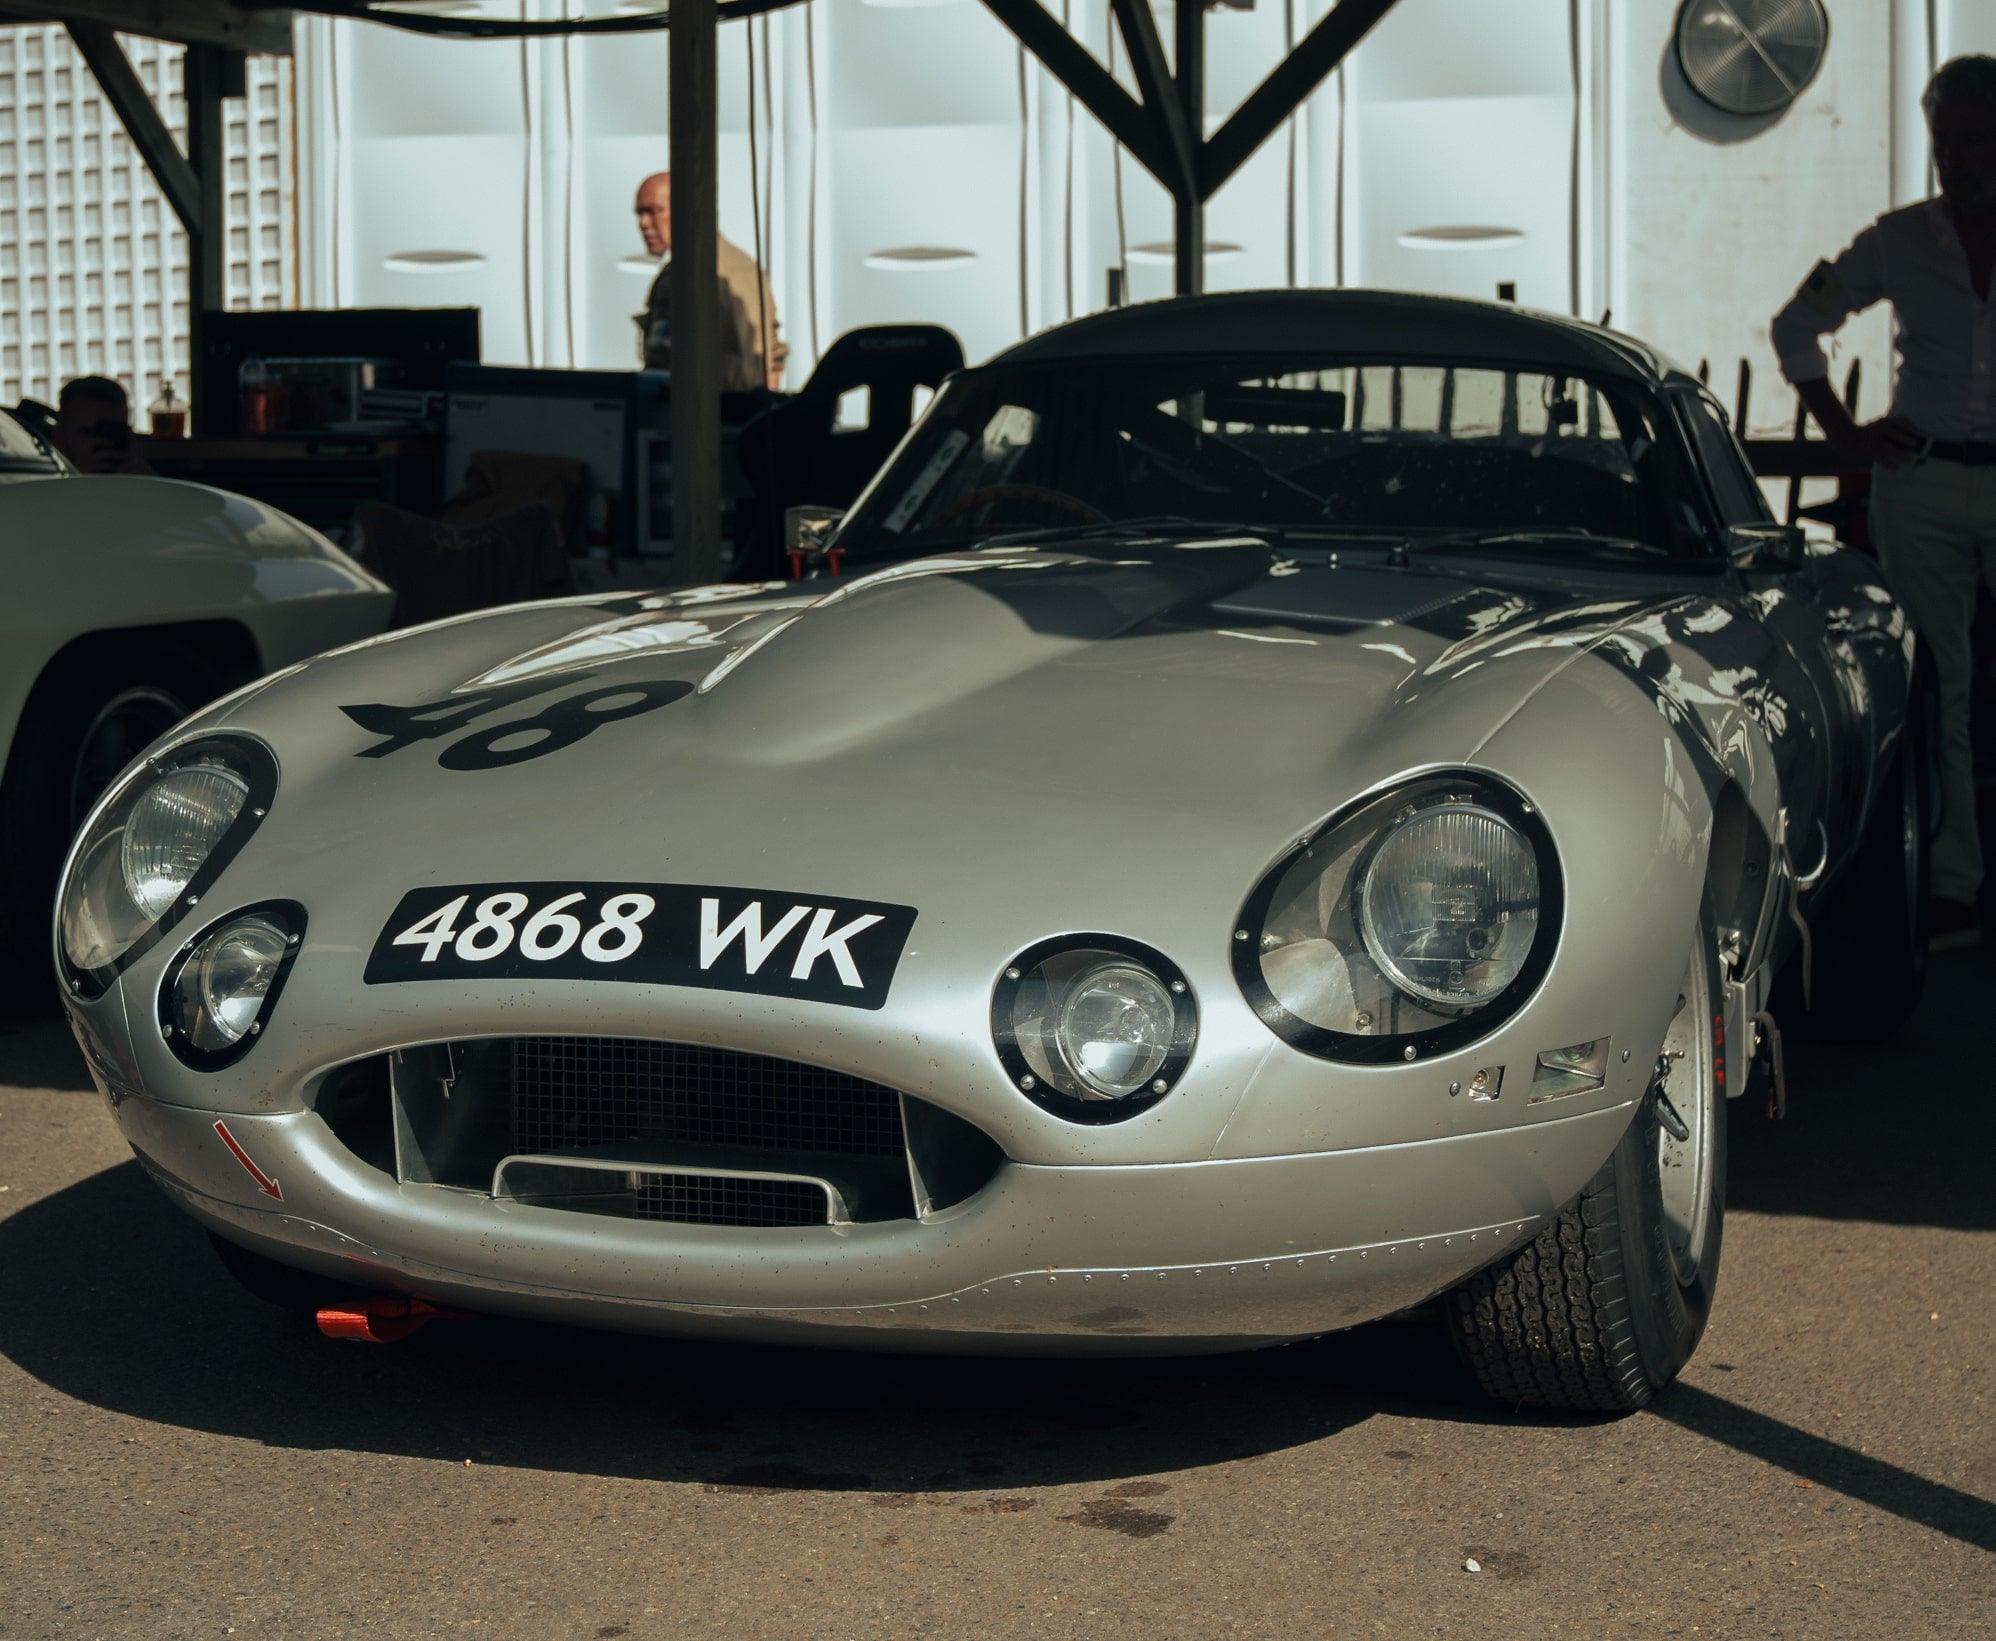 Jaguar Revives its Glorious Heritage at Goodwood